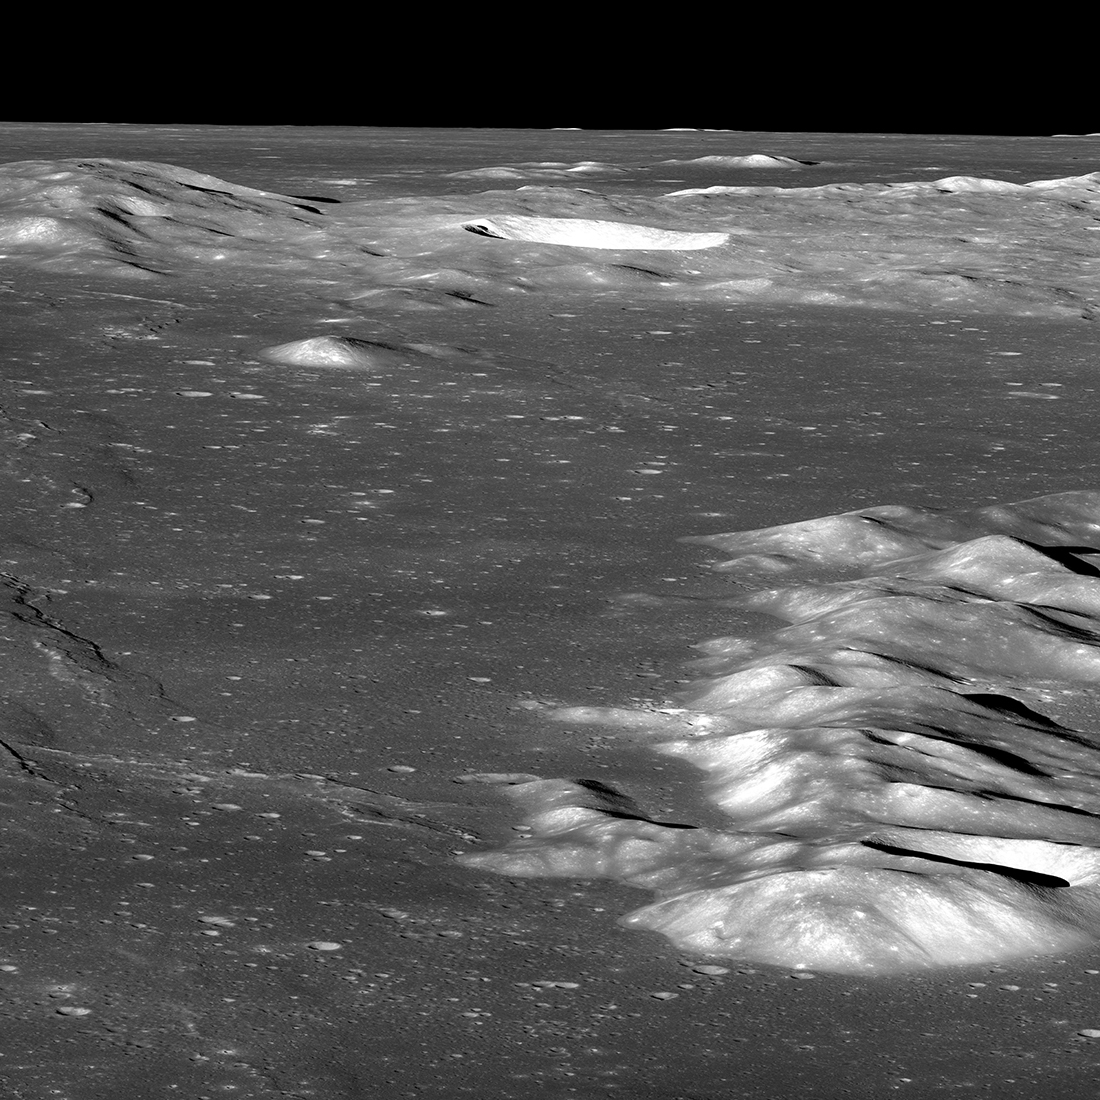 Wrinkle ridges near Mons Recti